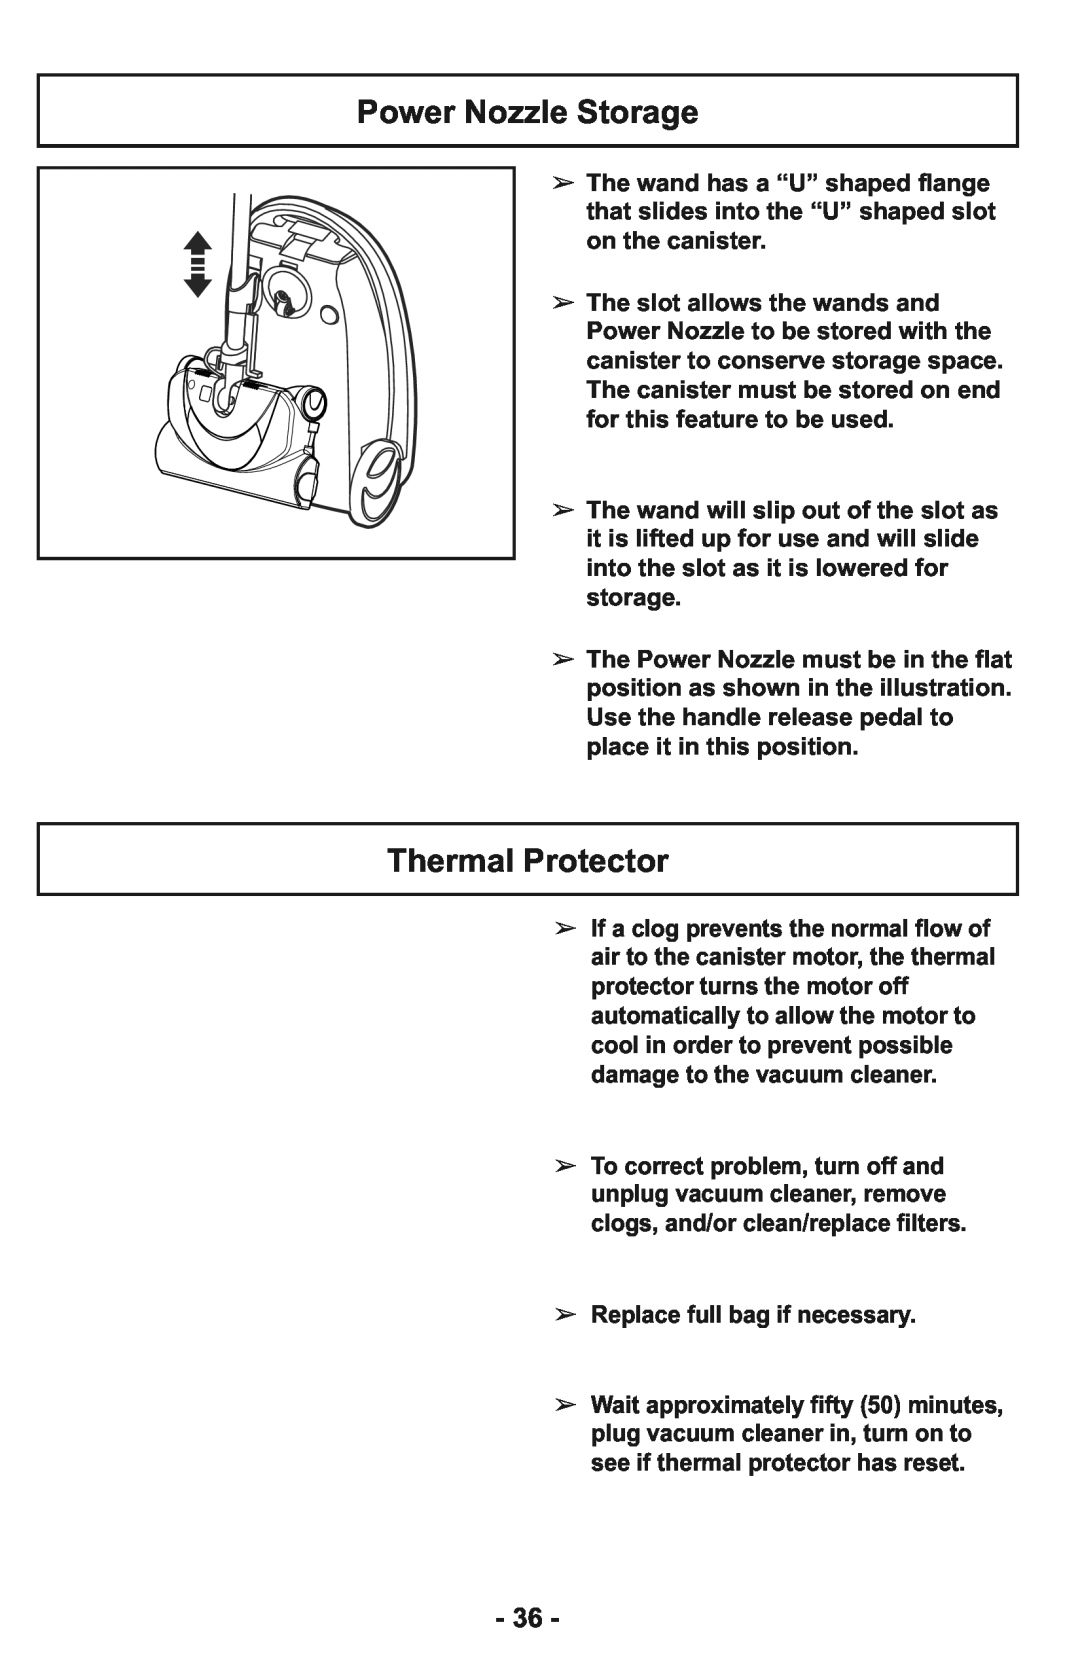 Panasonic MC-CG937 manuel dutilisation Power Nozzle Storage, Thermal Protector 